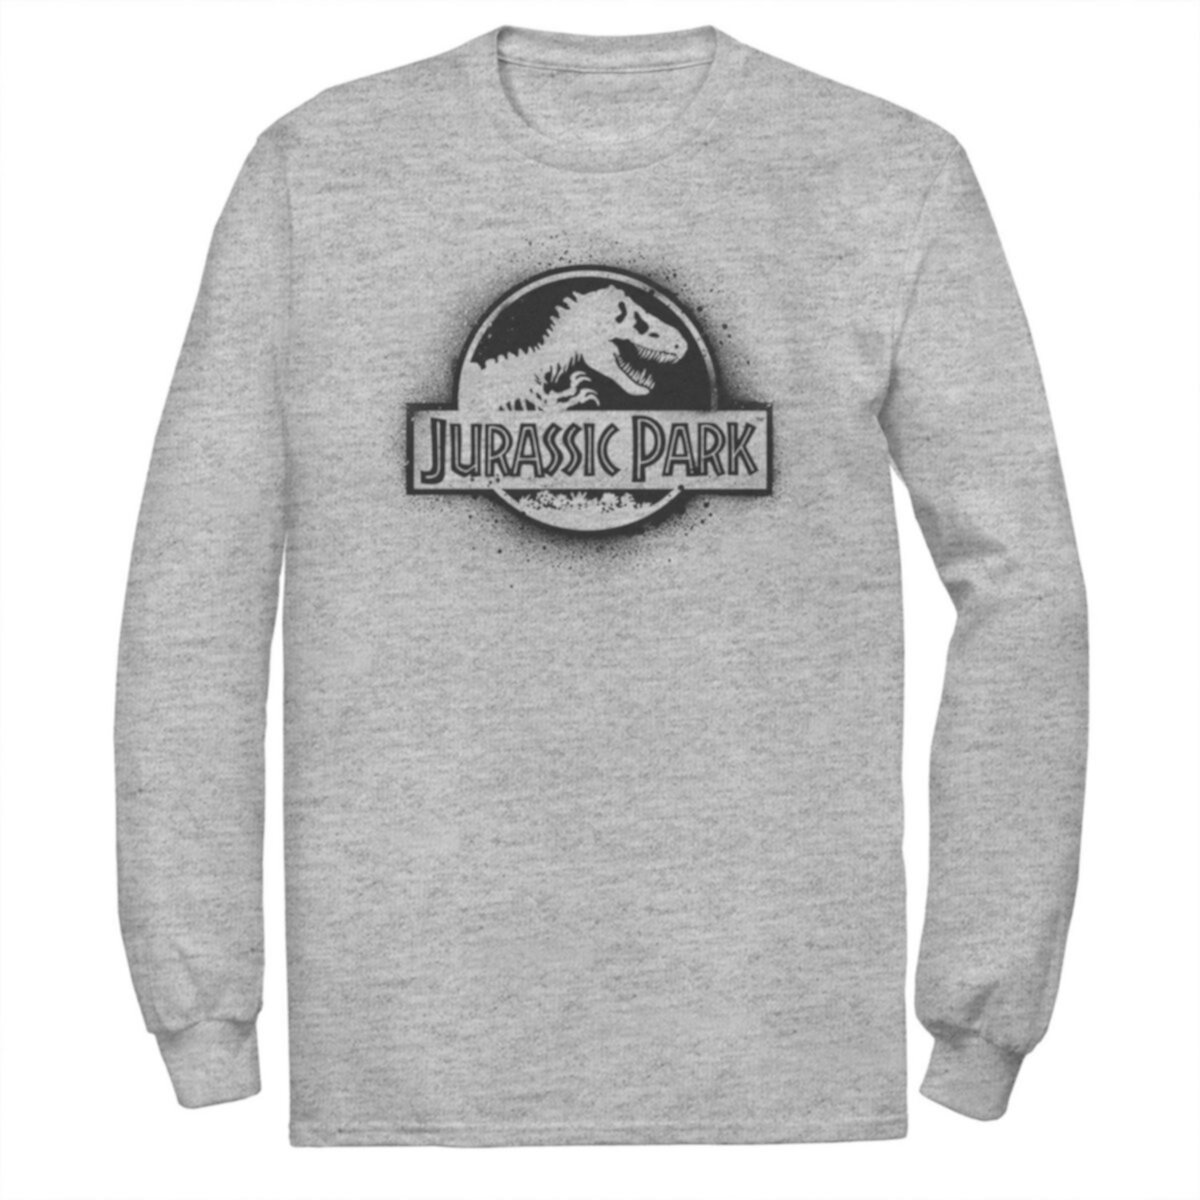 Мужская футболка Jurassic Park All White с трафаретной краской и логотипом из фильма Jurassic World